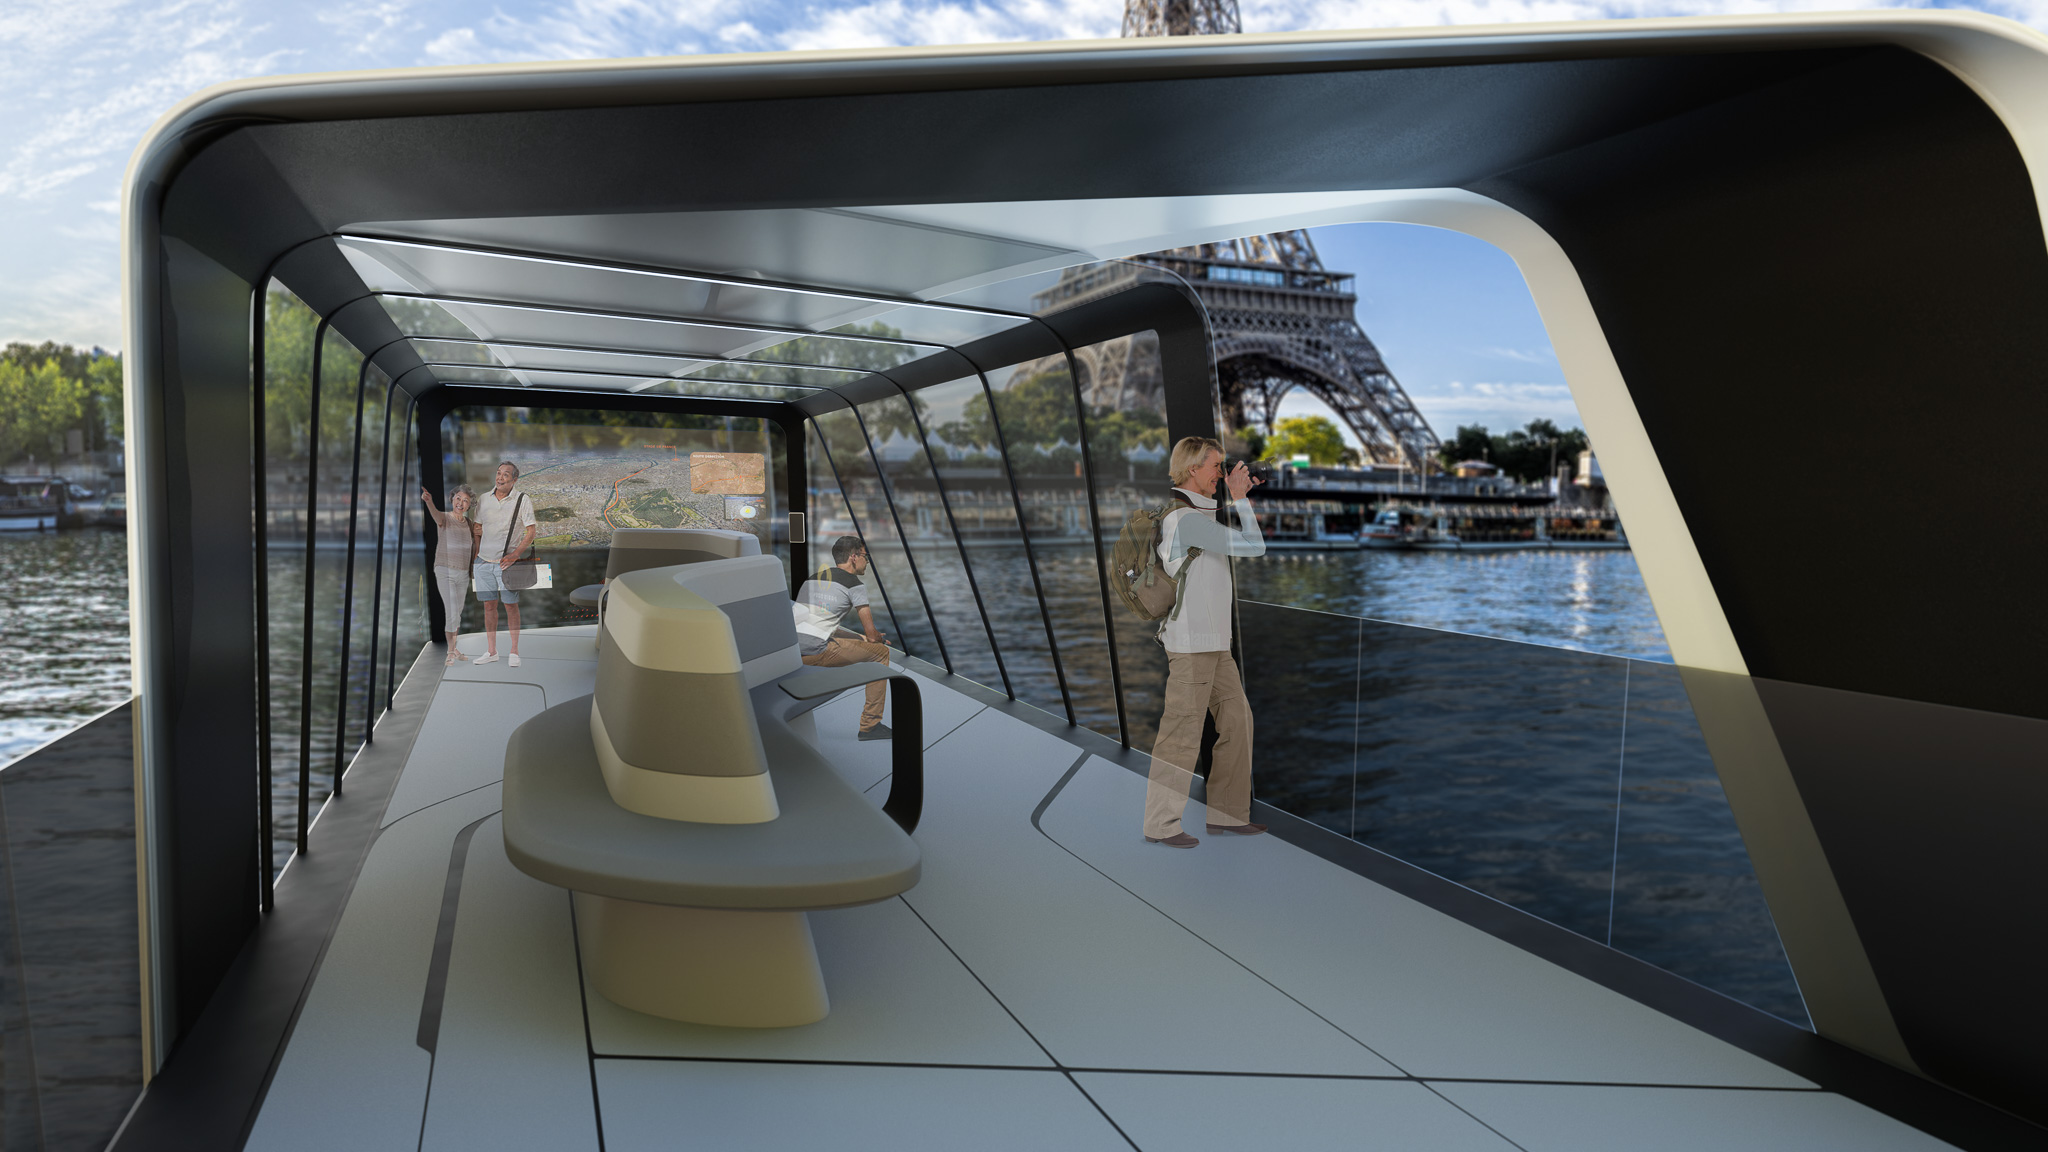 electrical-and-autonomous-ferry-paris-olympic-games-royal-van-der-leun-electrical-installation-autonome-ferry-vdl-seine-eiffel-tower-1